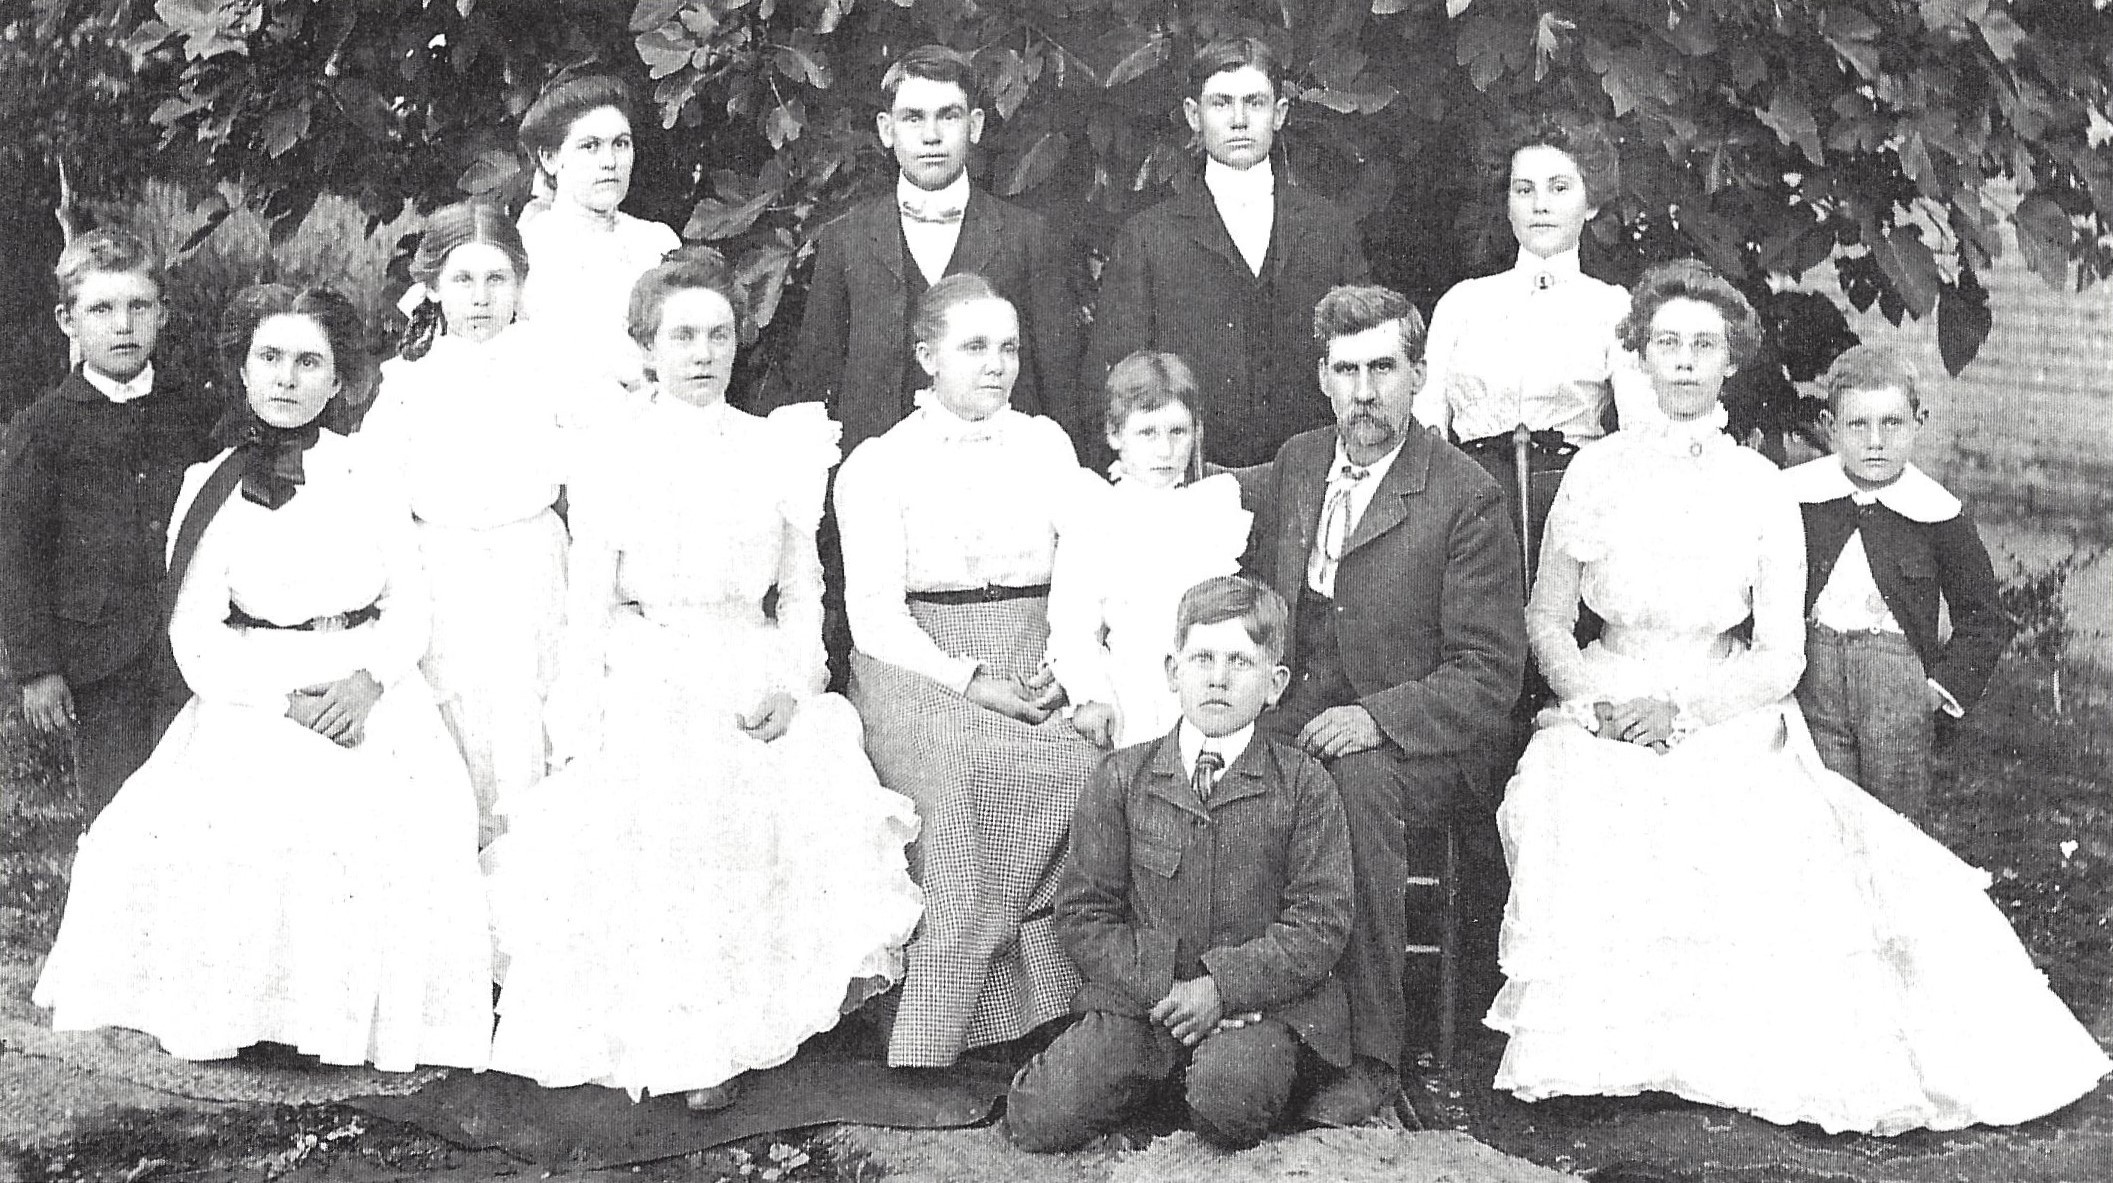 The George & Cornelia Brooks family in 1901